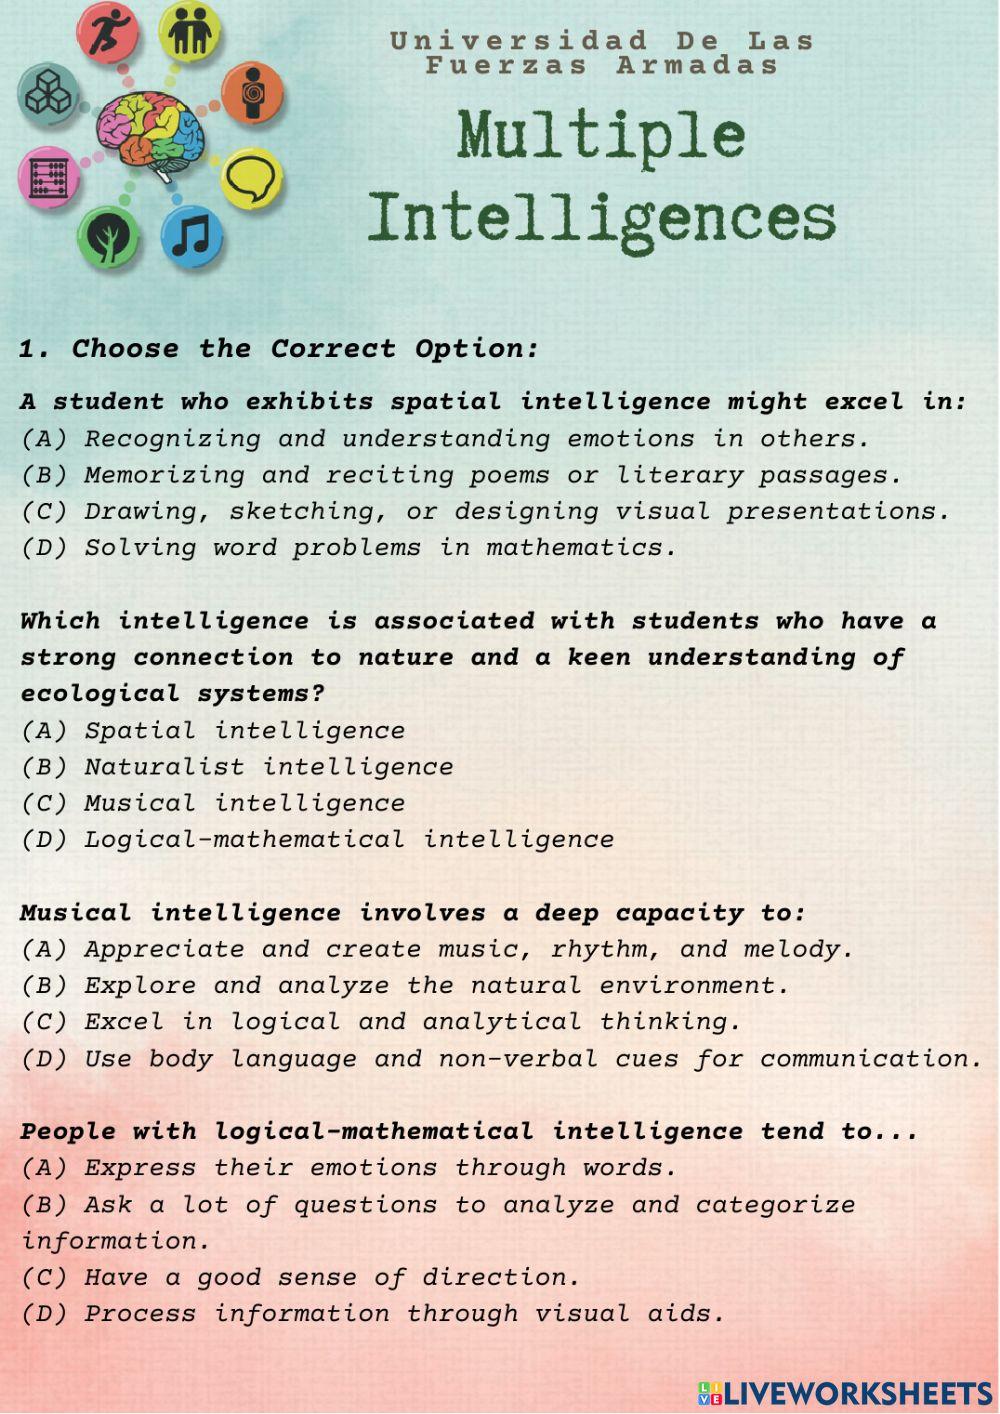 Multiple Intelligences activity